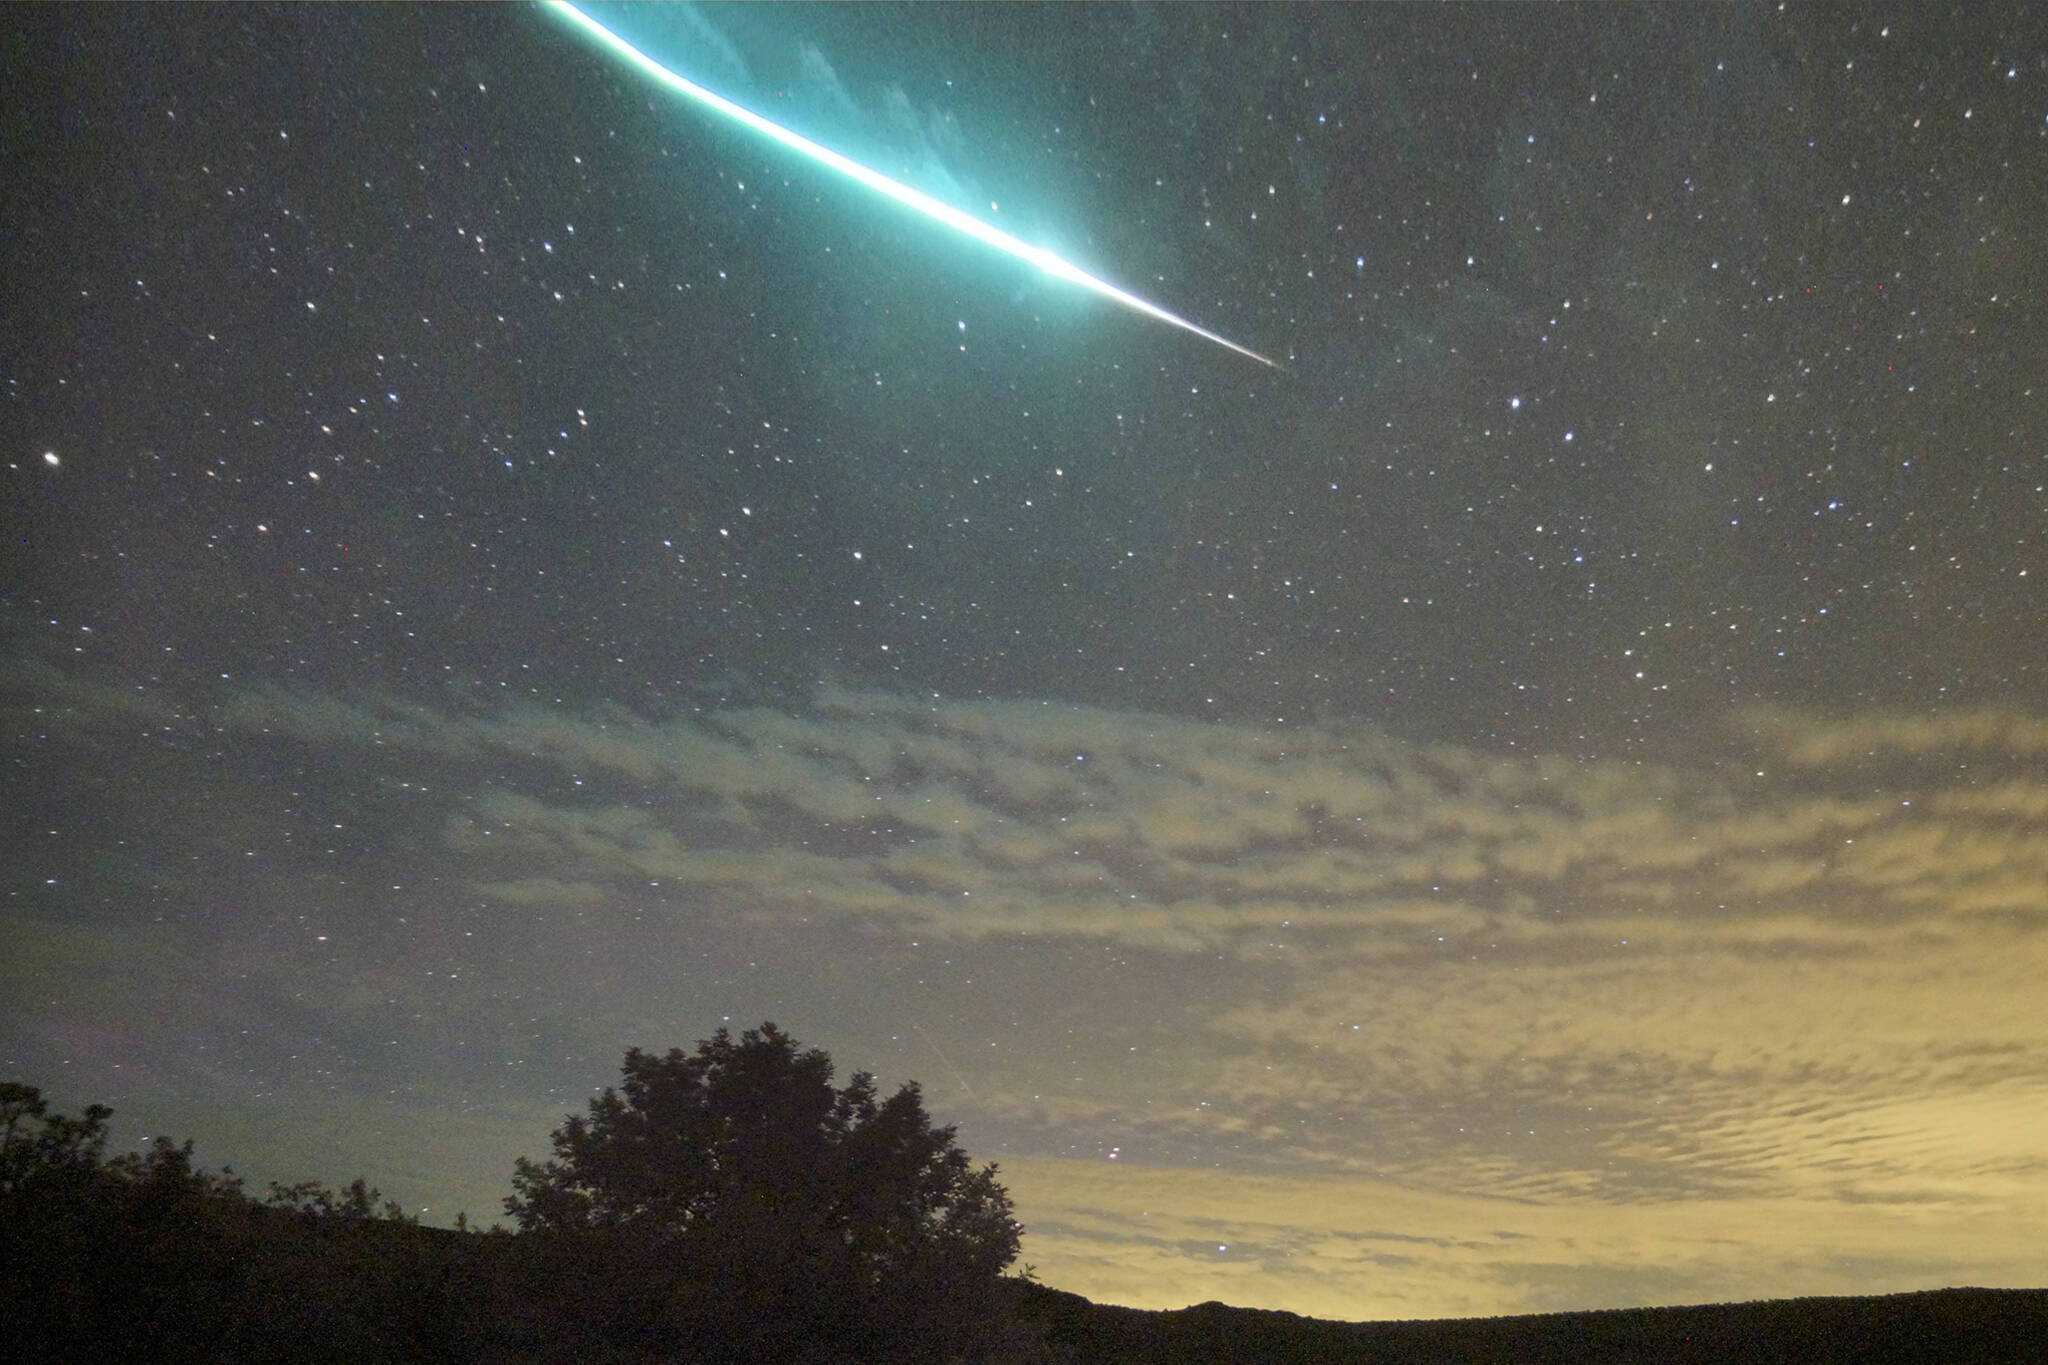 taurids meteor shower